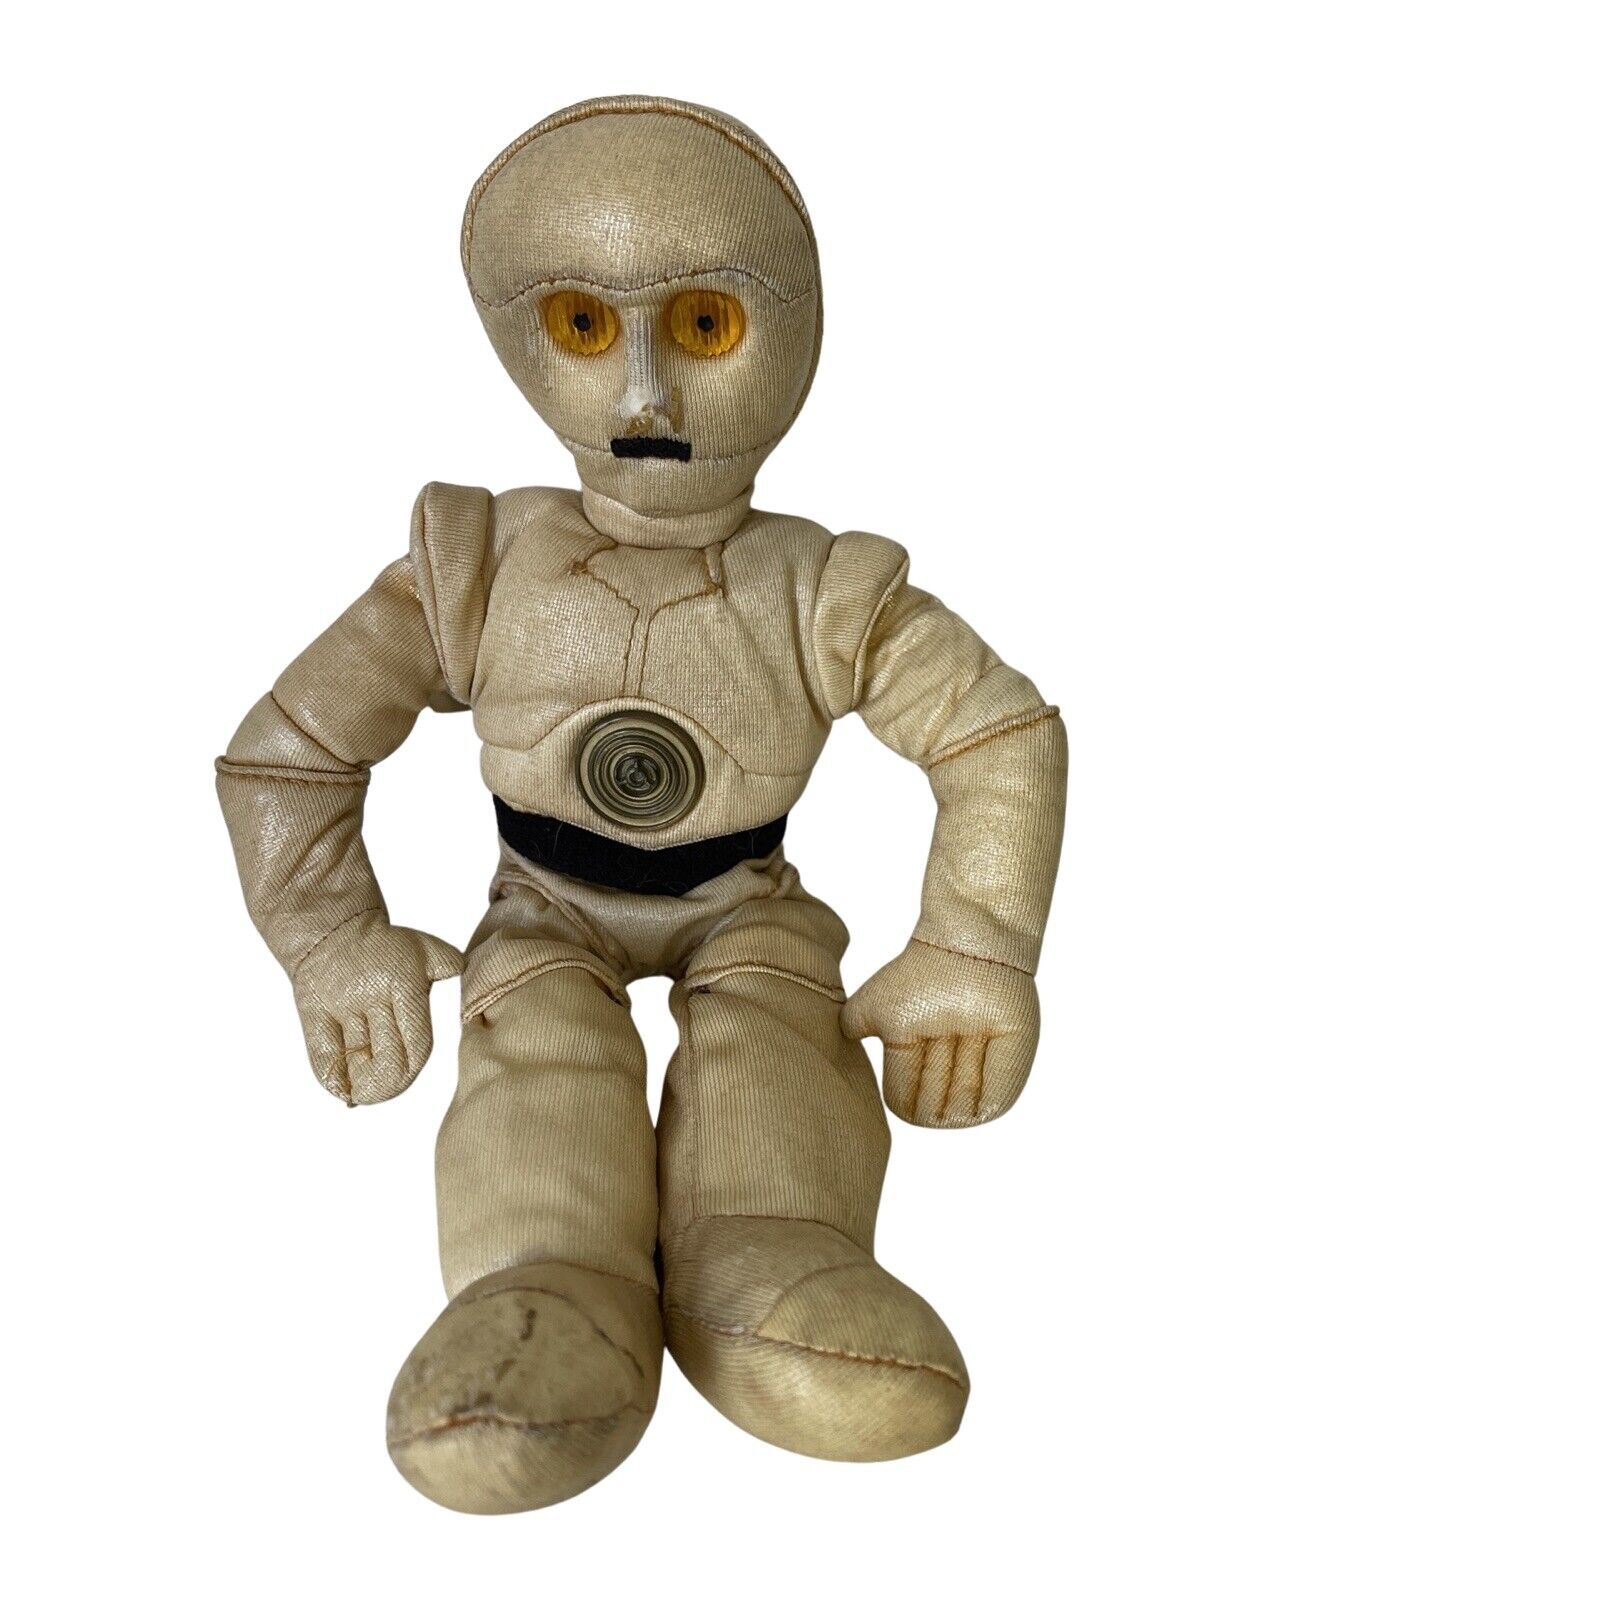 Vintage Star Wars Buddies C-3PO Stuffed 10” Beanie Doll Kenner 1997 Collectible